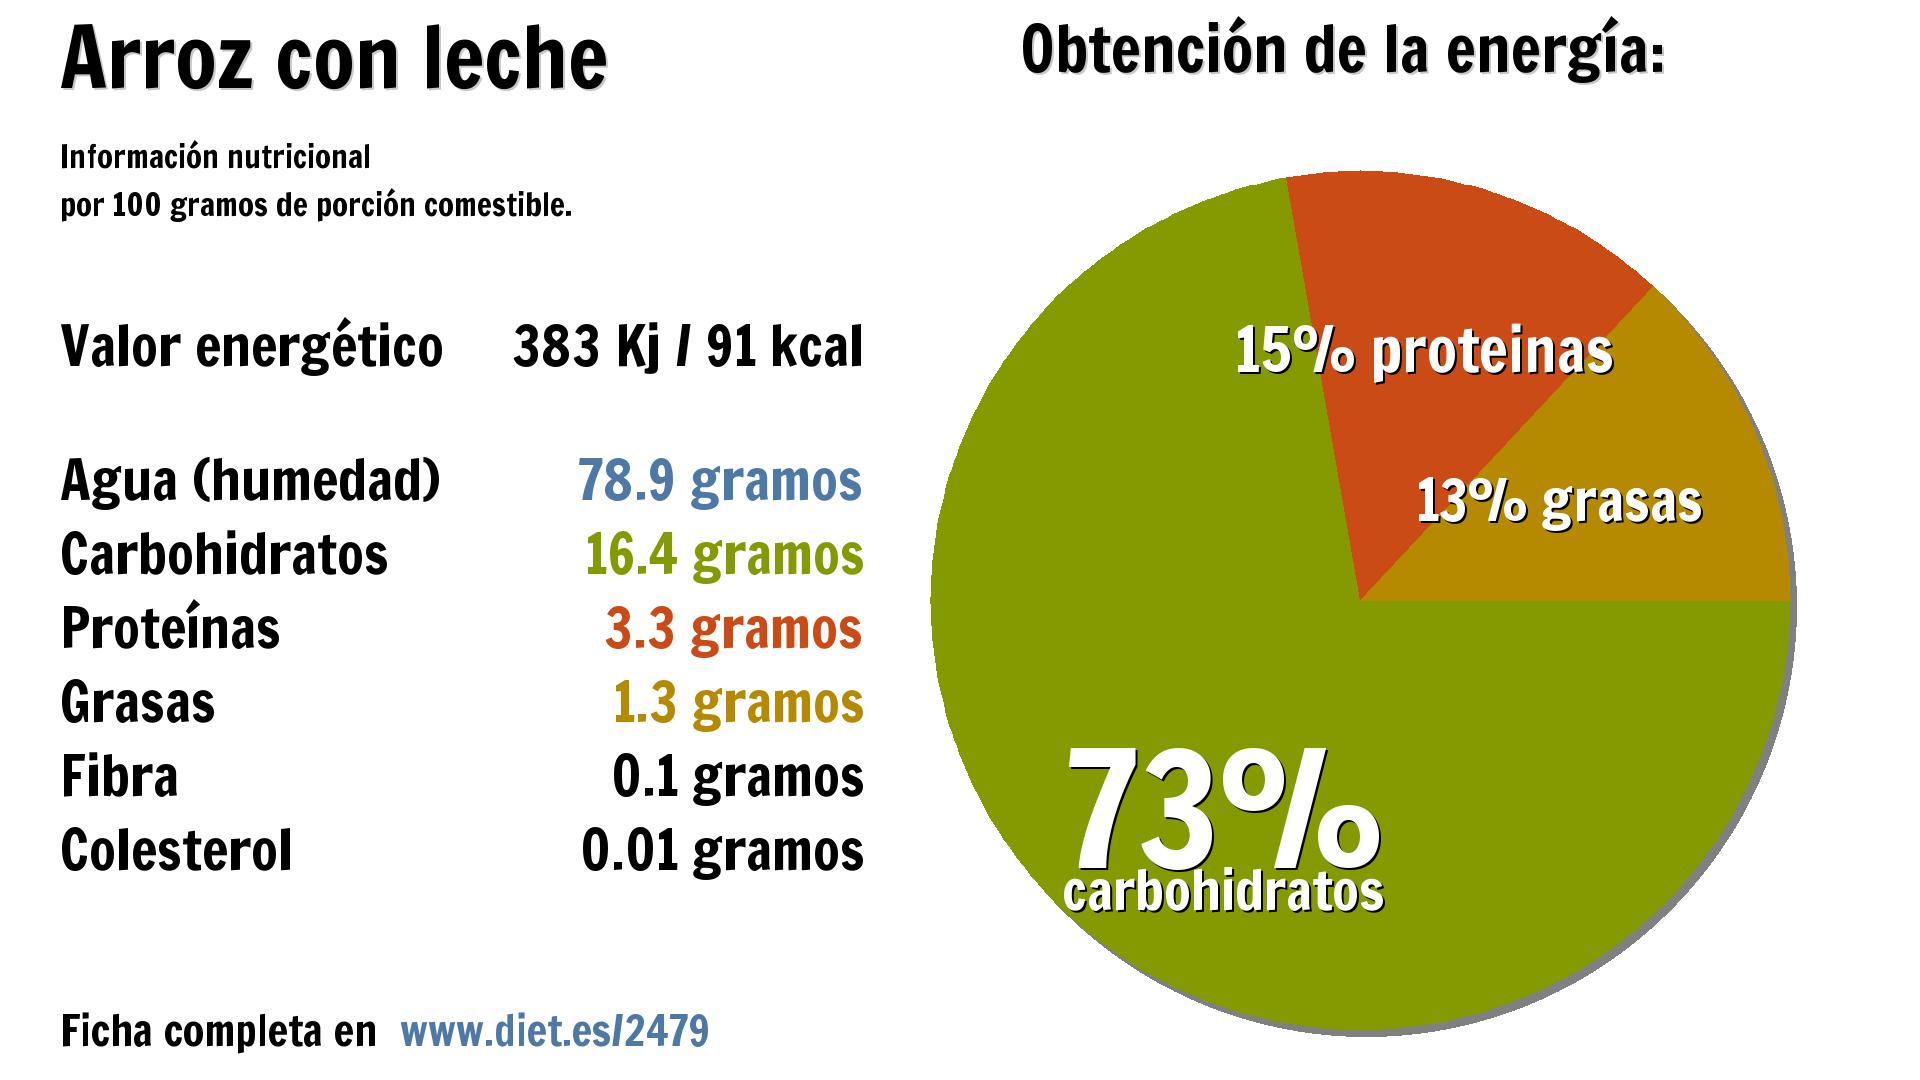 Arroz con leche: energía 383 Kj, agua 79 g., carbohidratos 16 g., proteínas 3 g. y grasas 1 g.